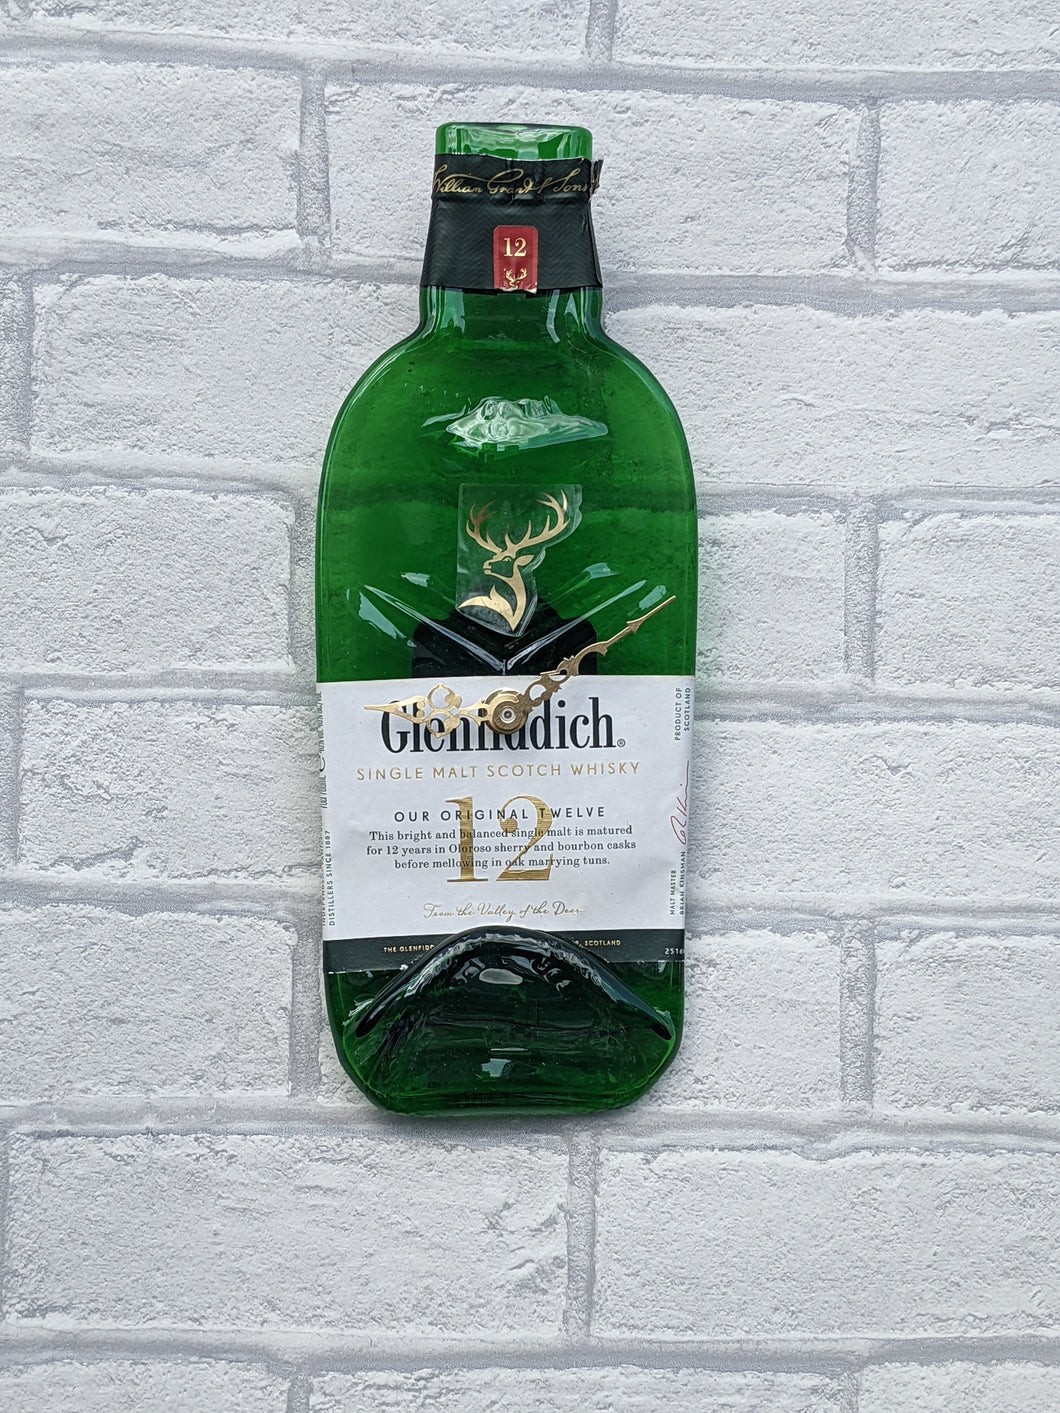 Glenfiddich whisky bottle clock